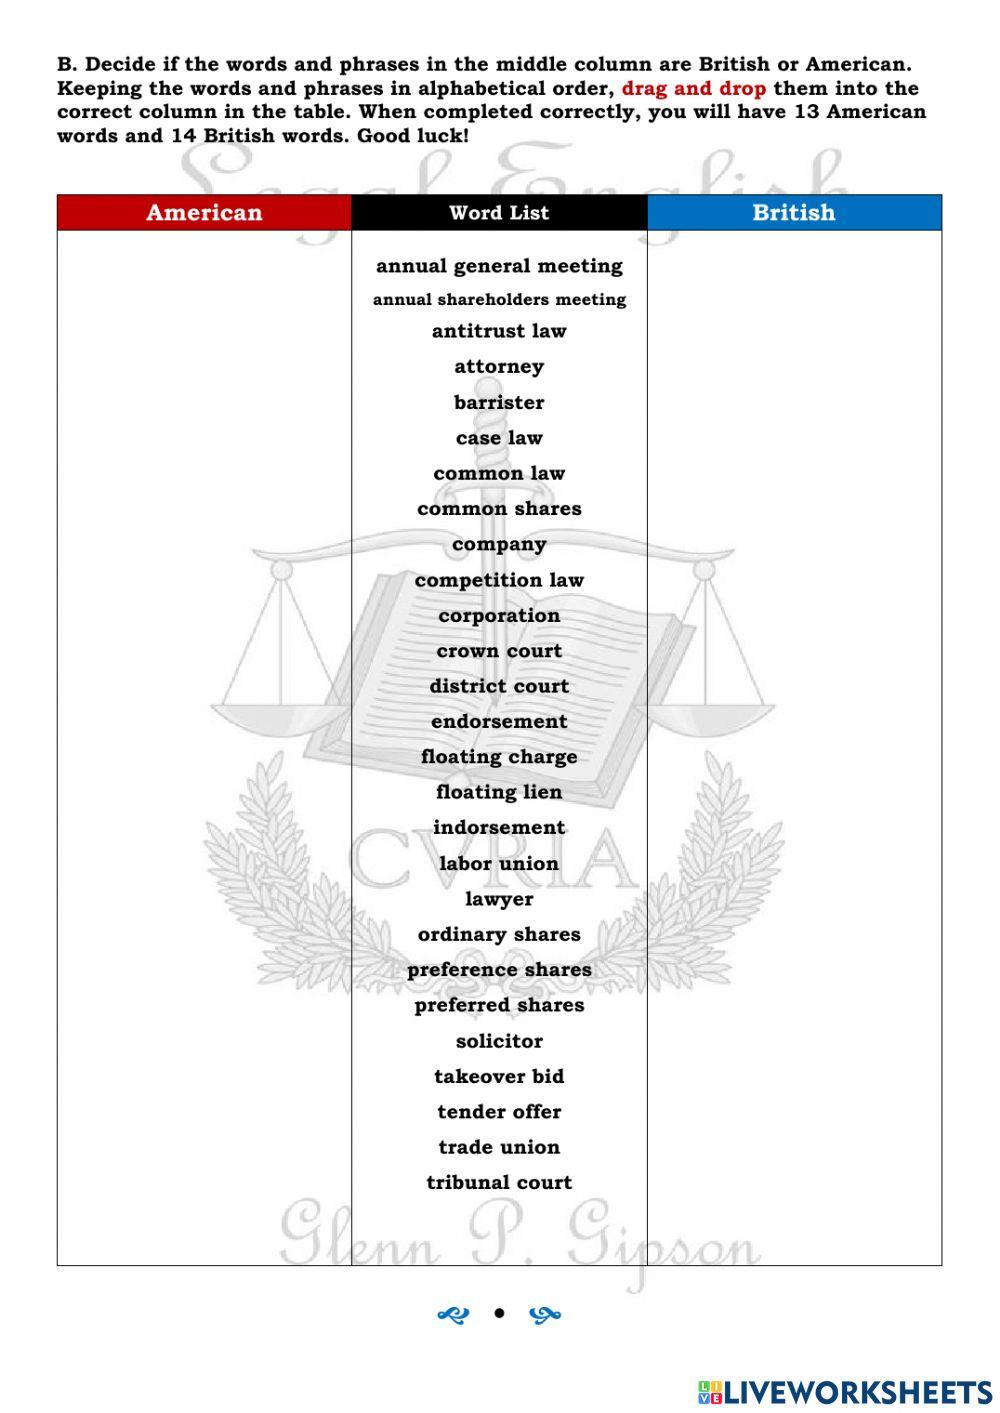 American or British Legal Vocabulary